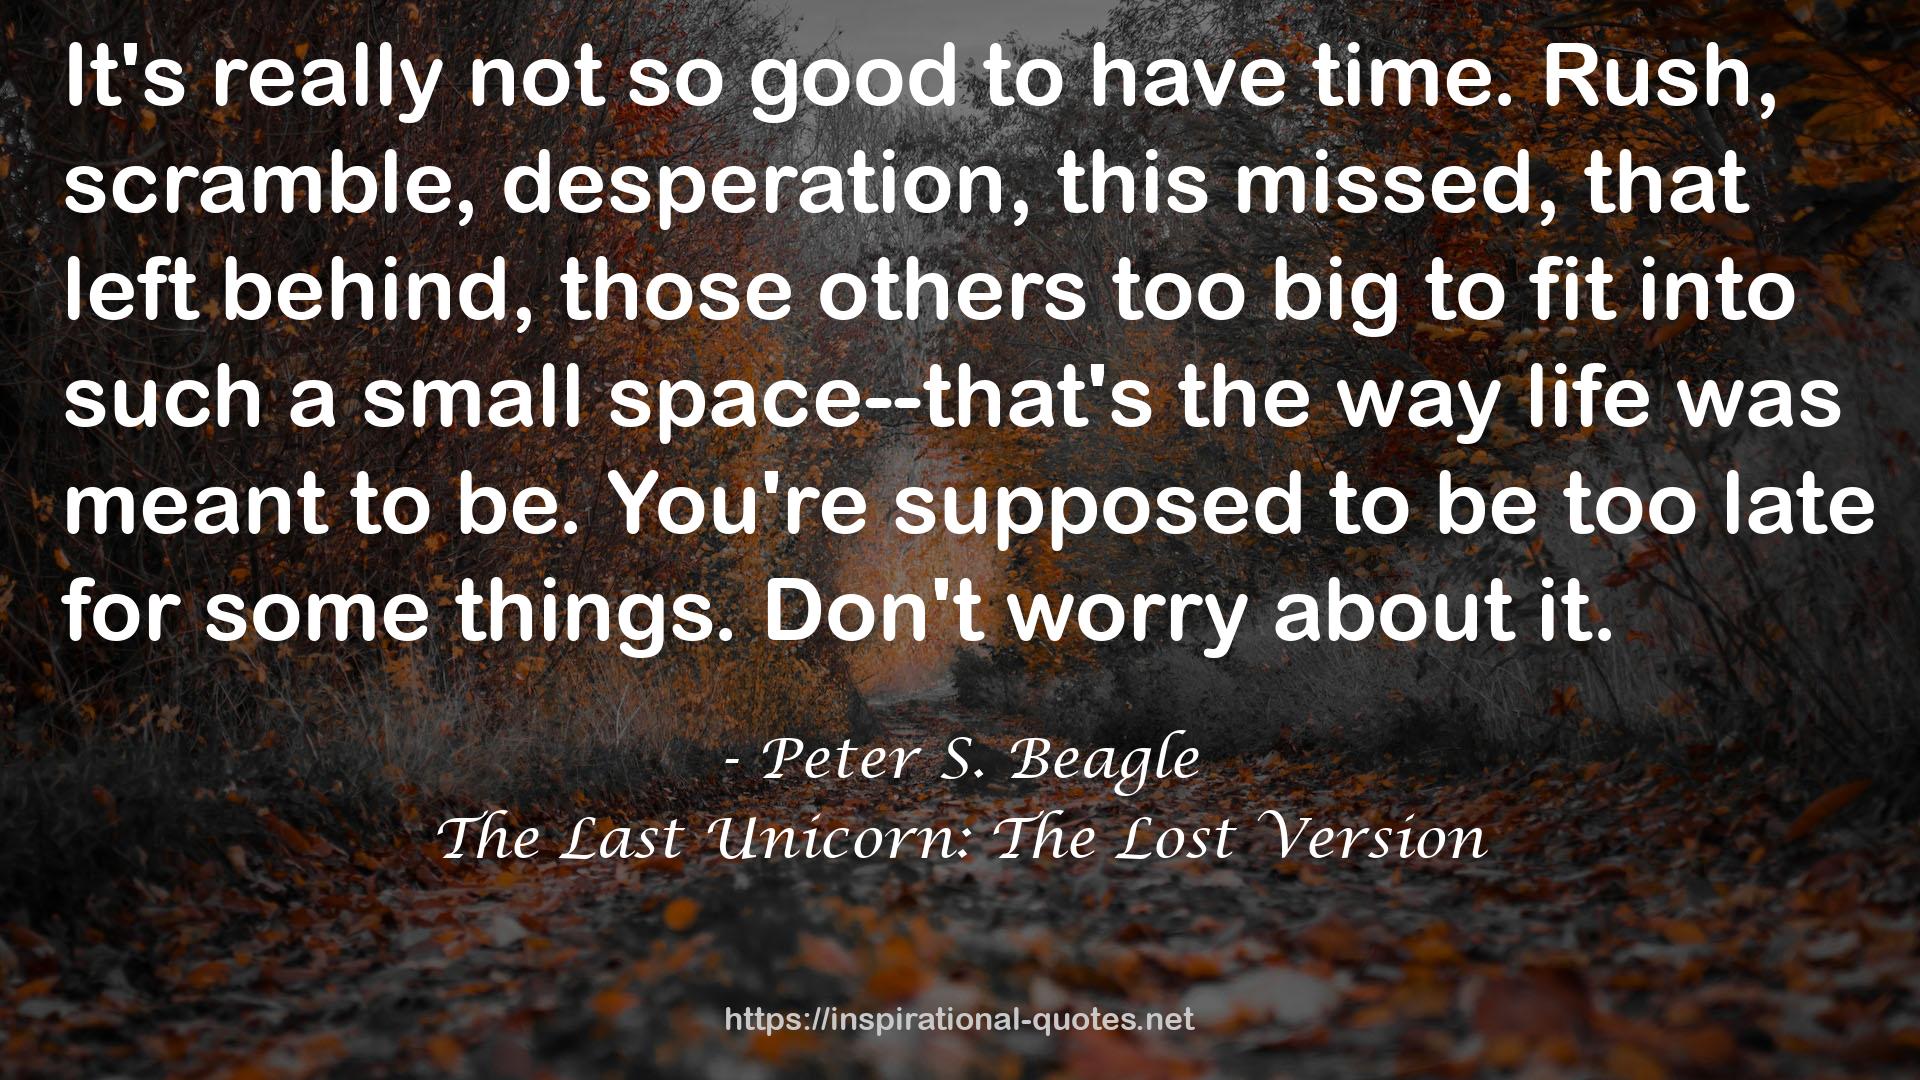 The Last Unicorn: The Lost Version QUOTES